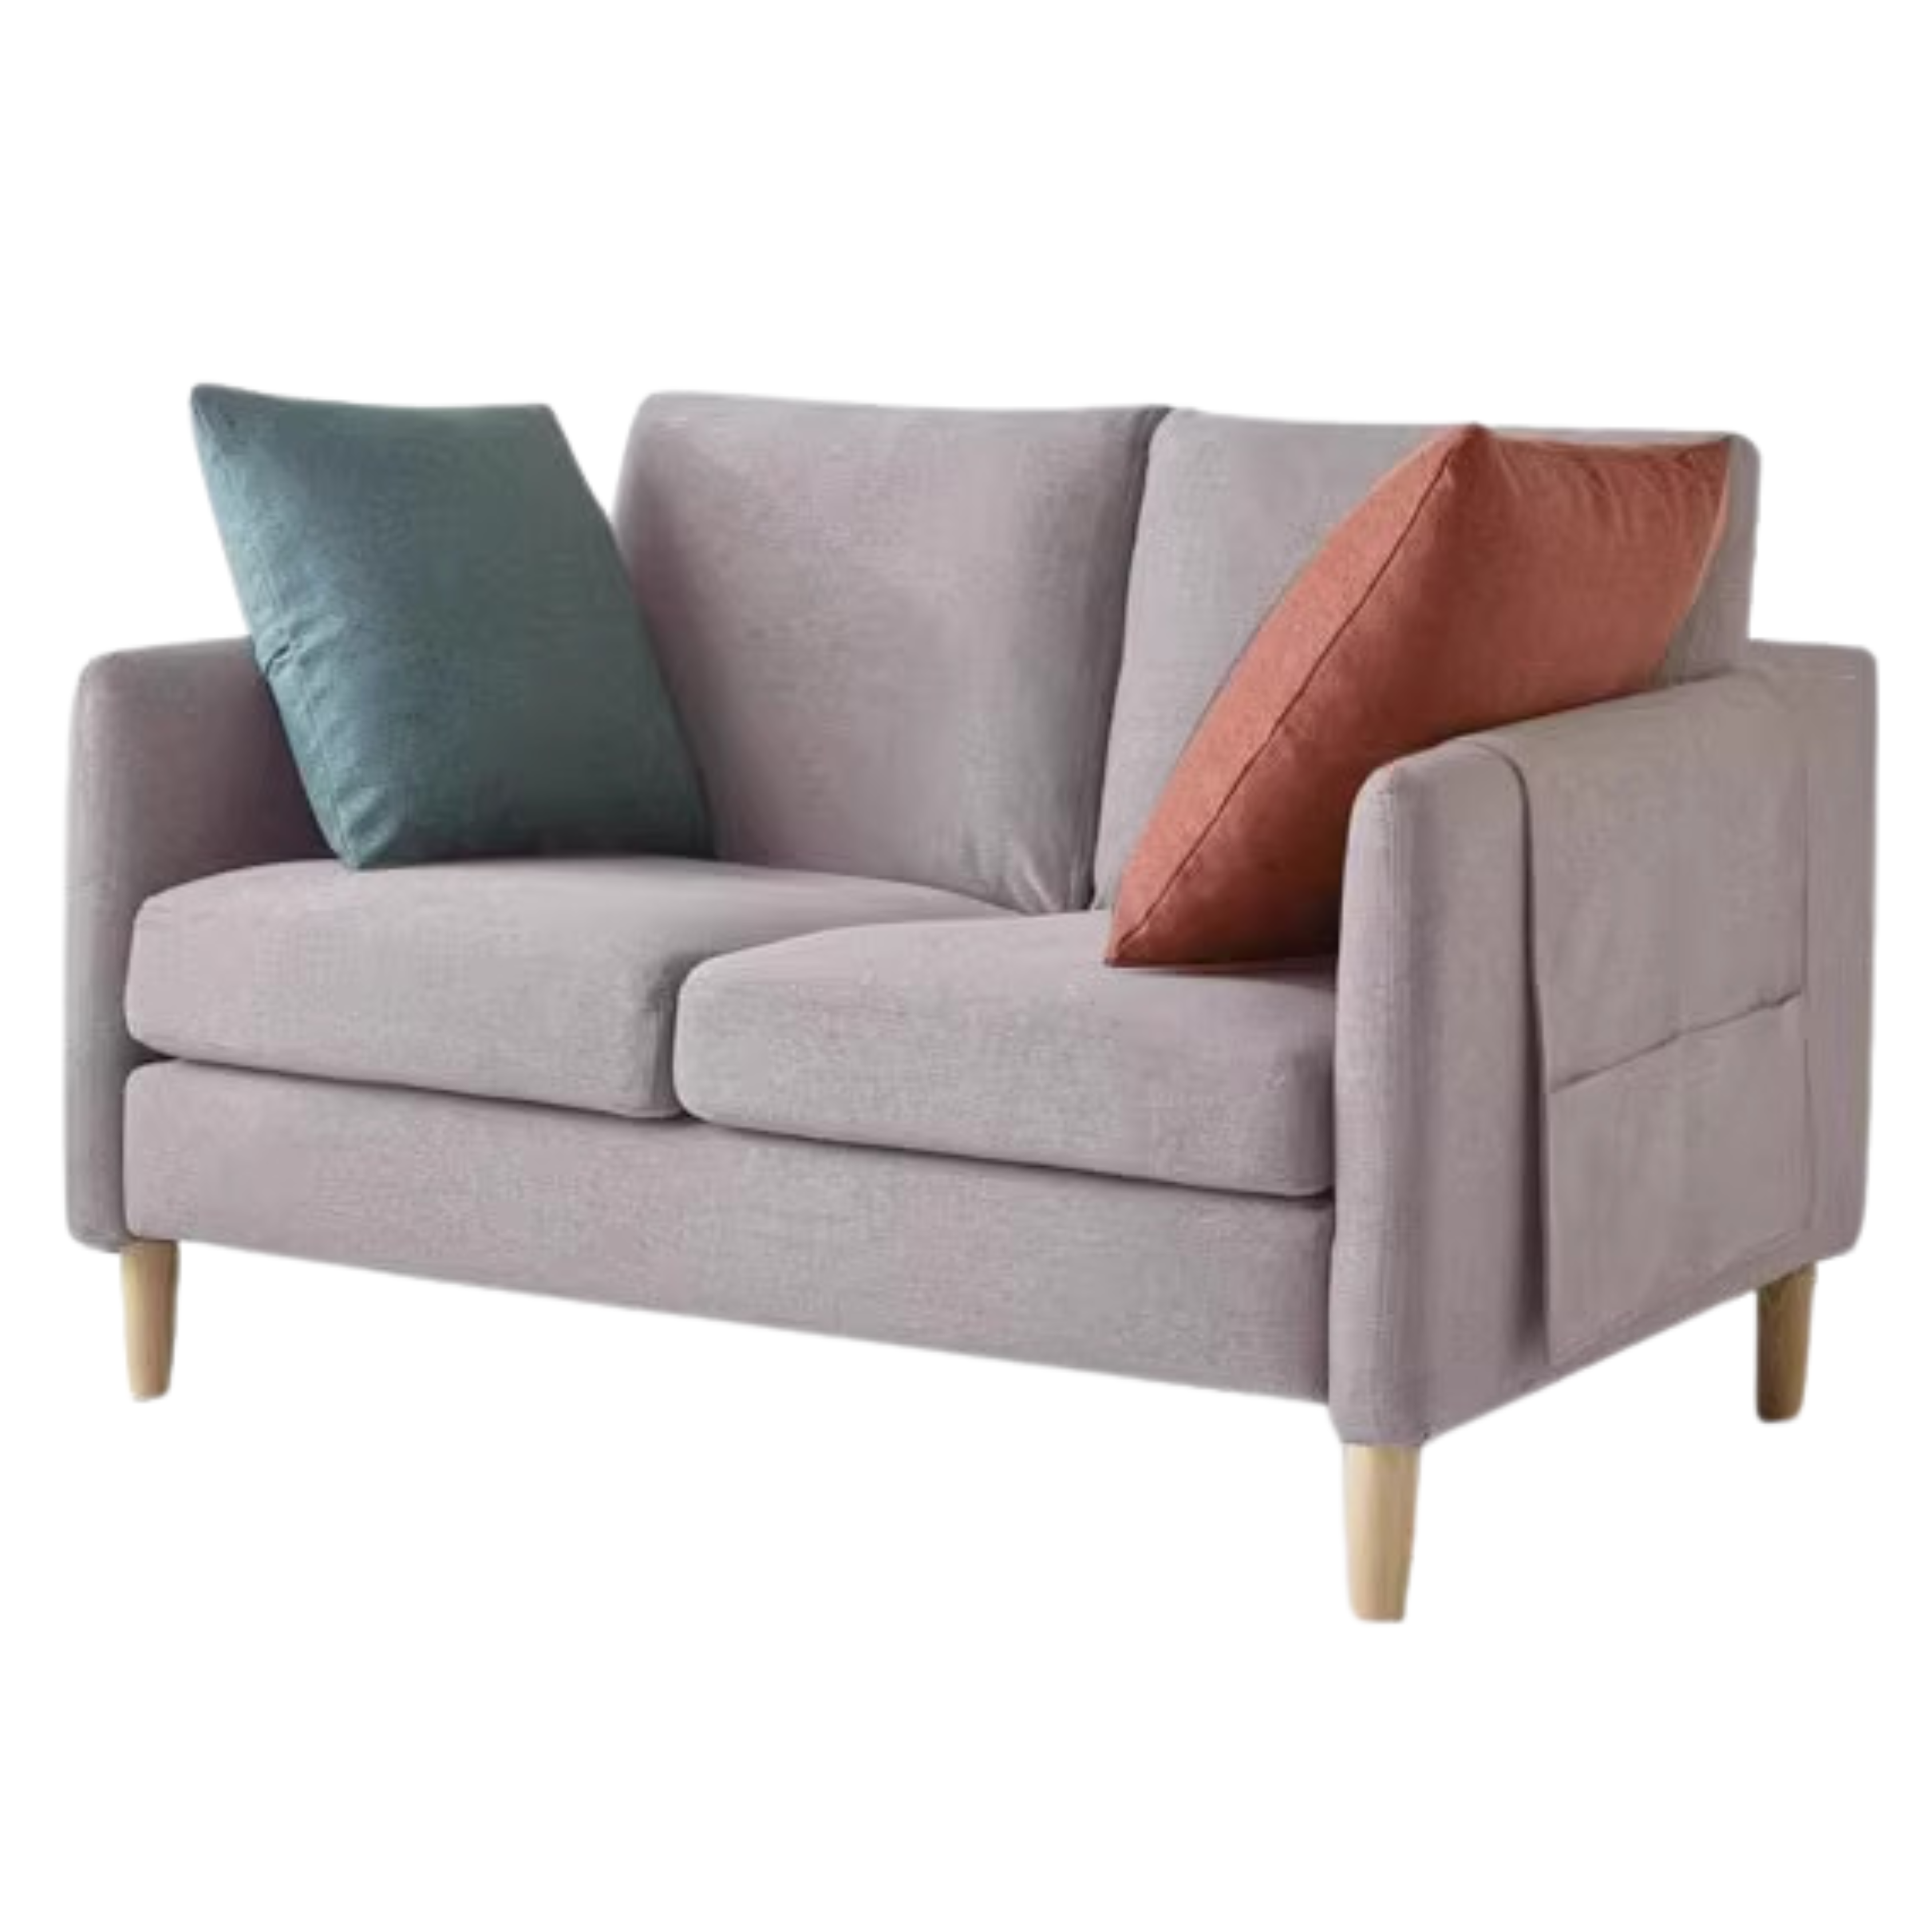 Fabric sofa simple modern)